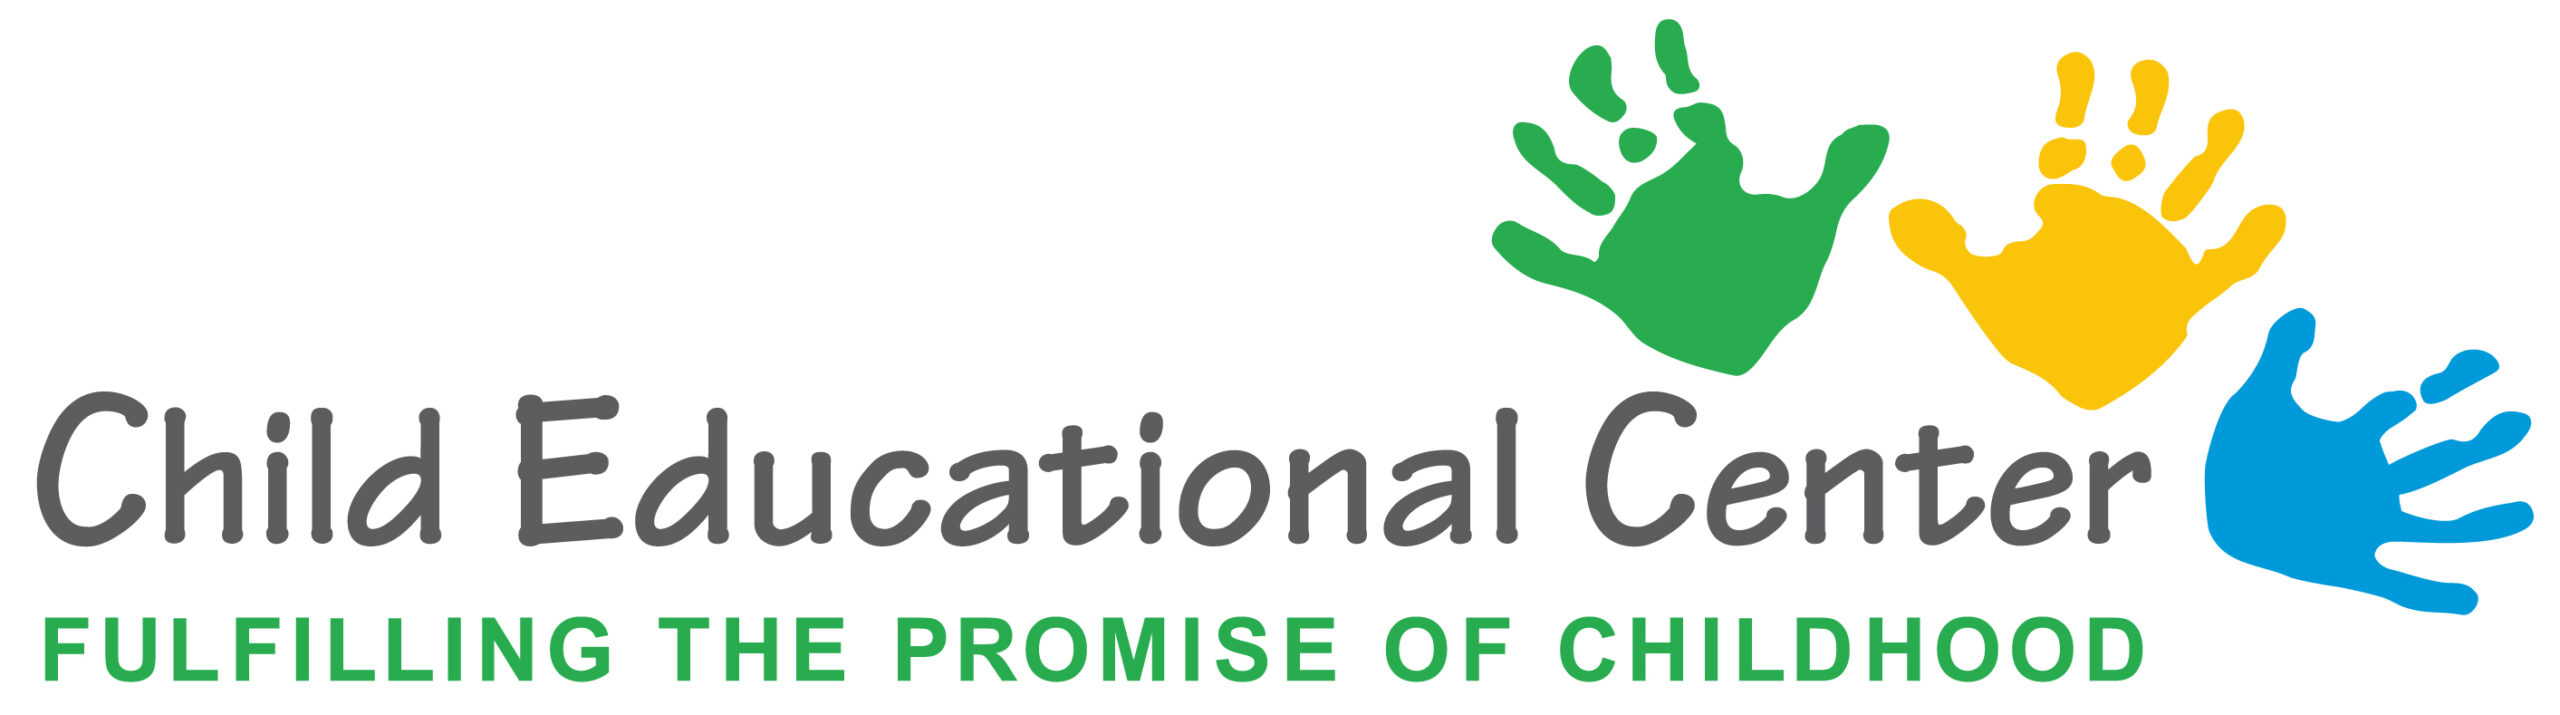 child-education-center logo